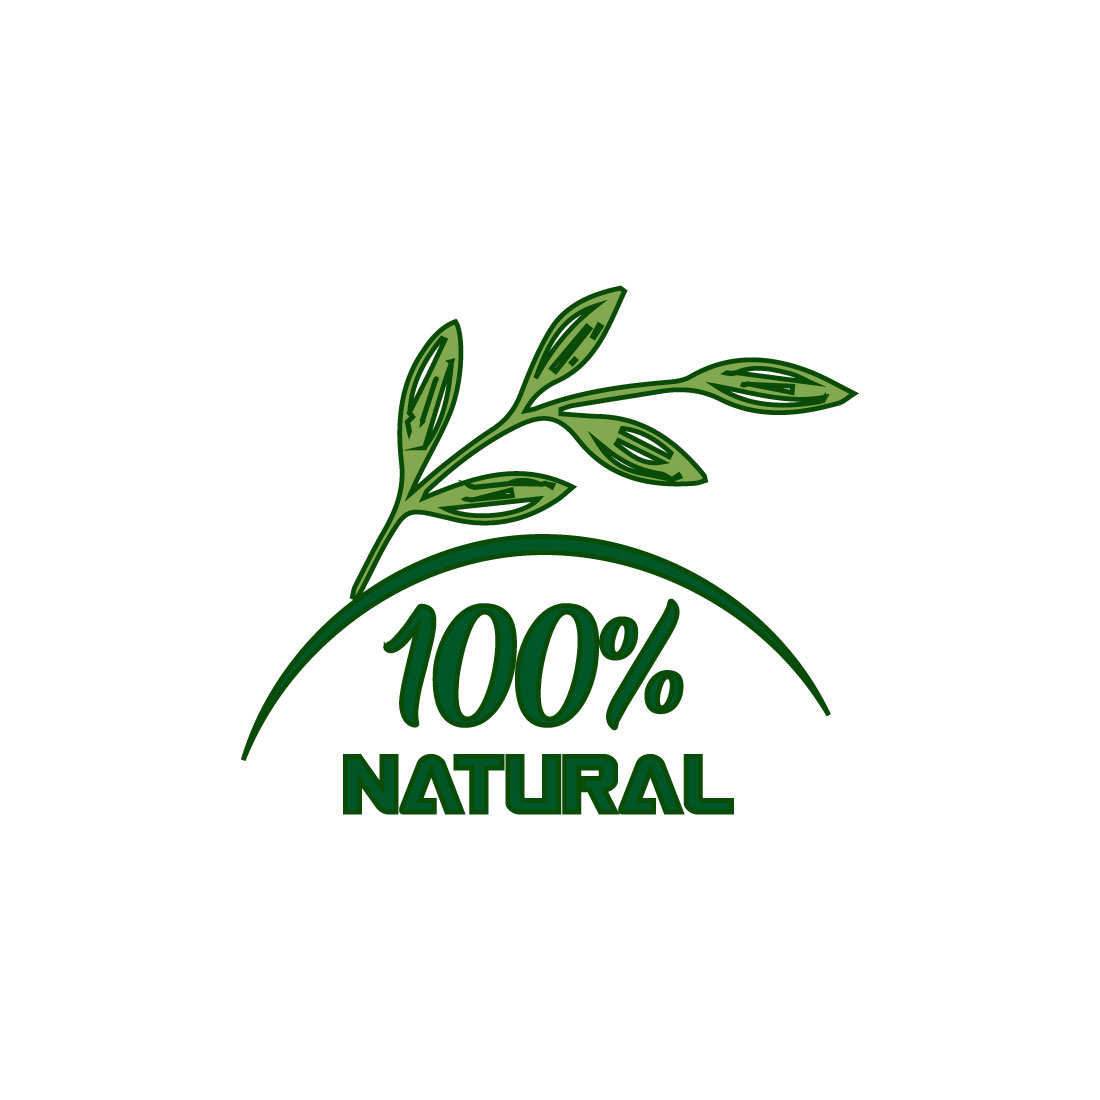 Free organic logo preview image.